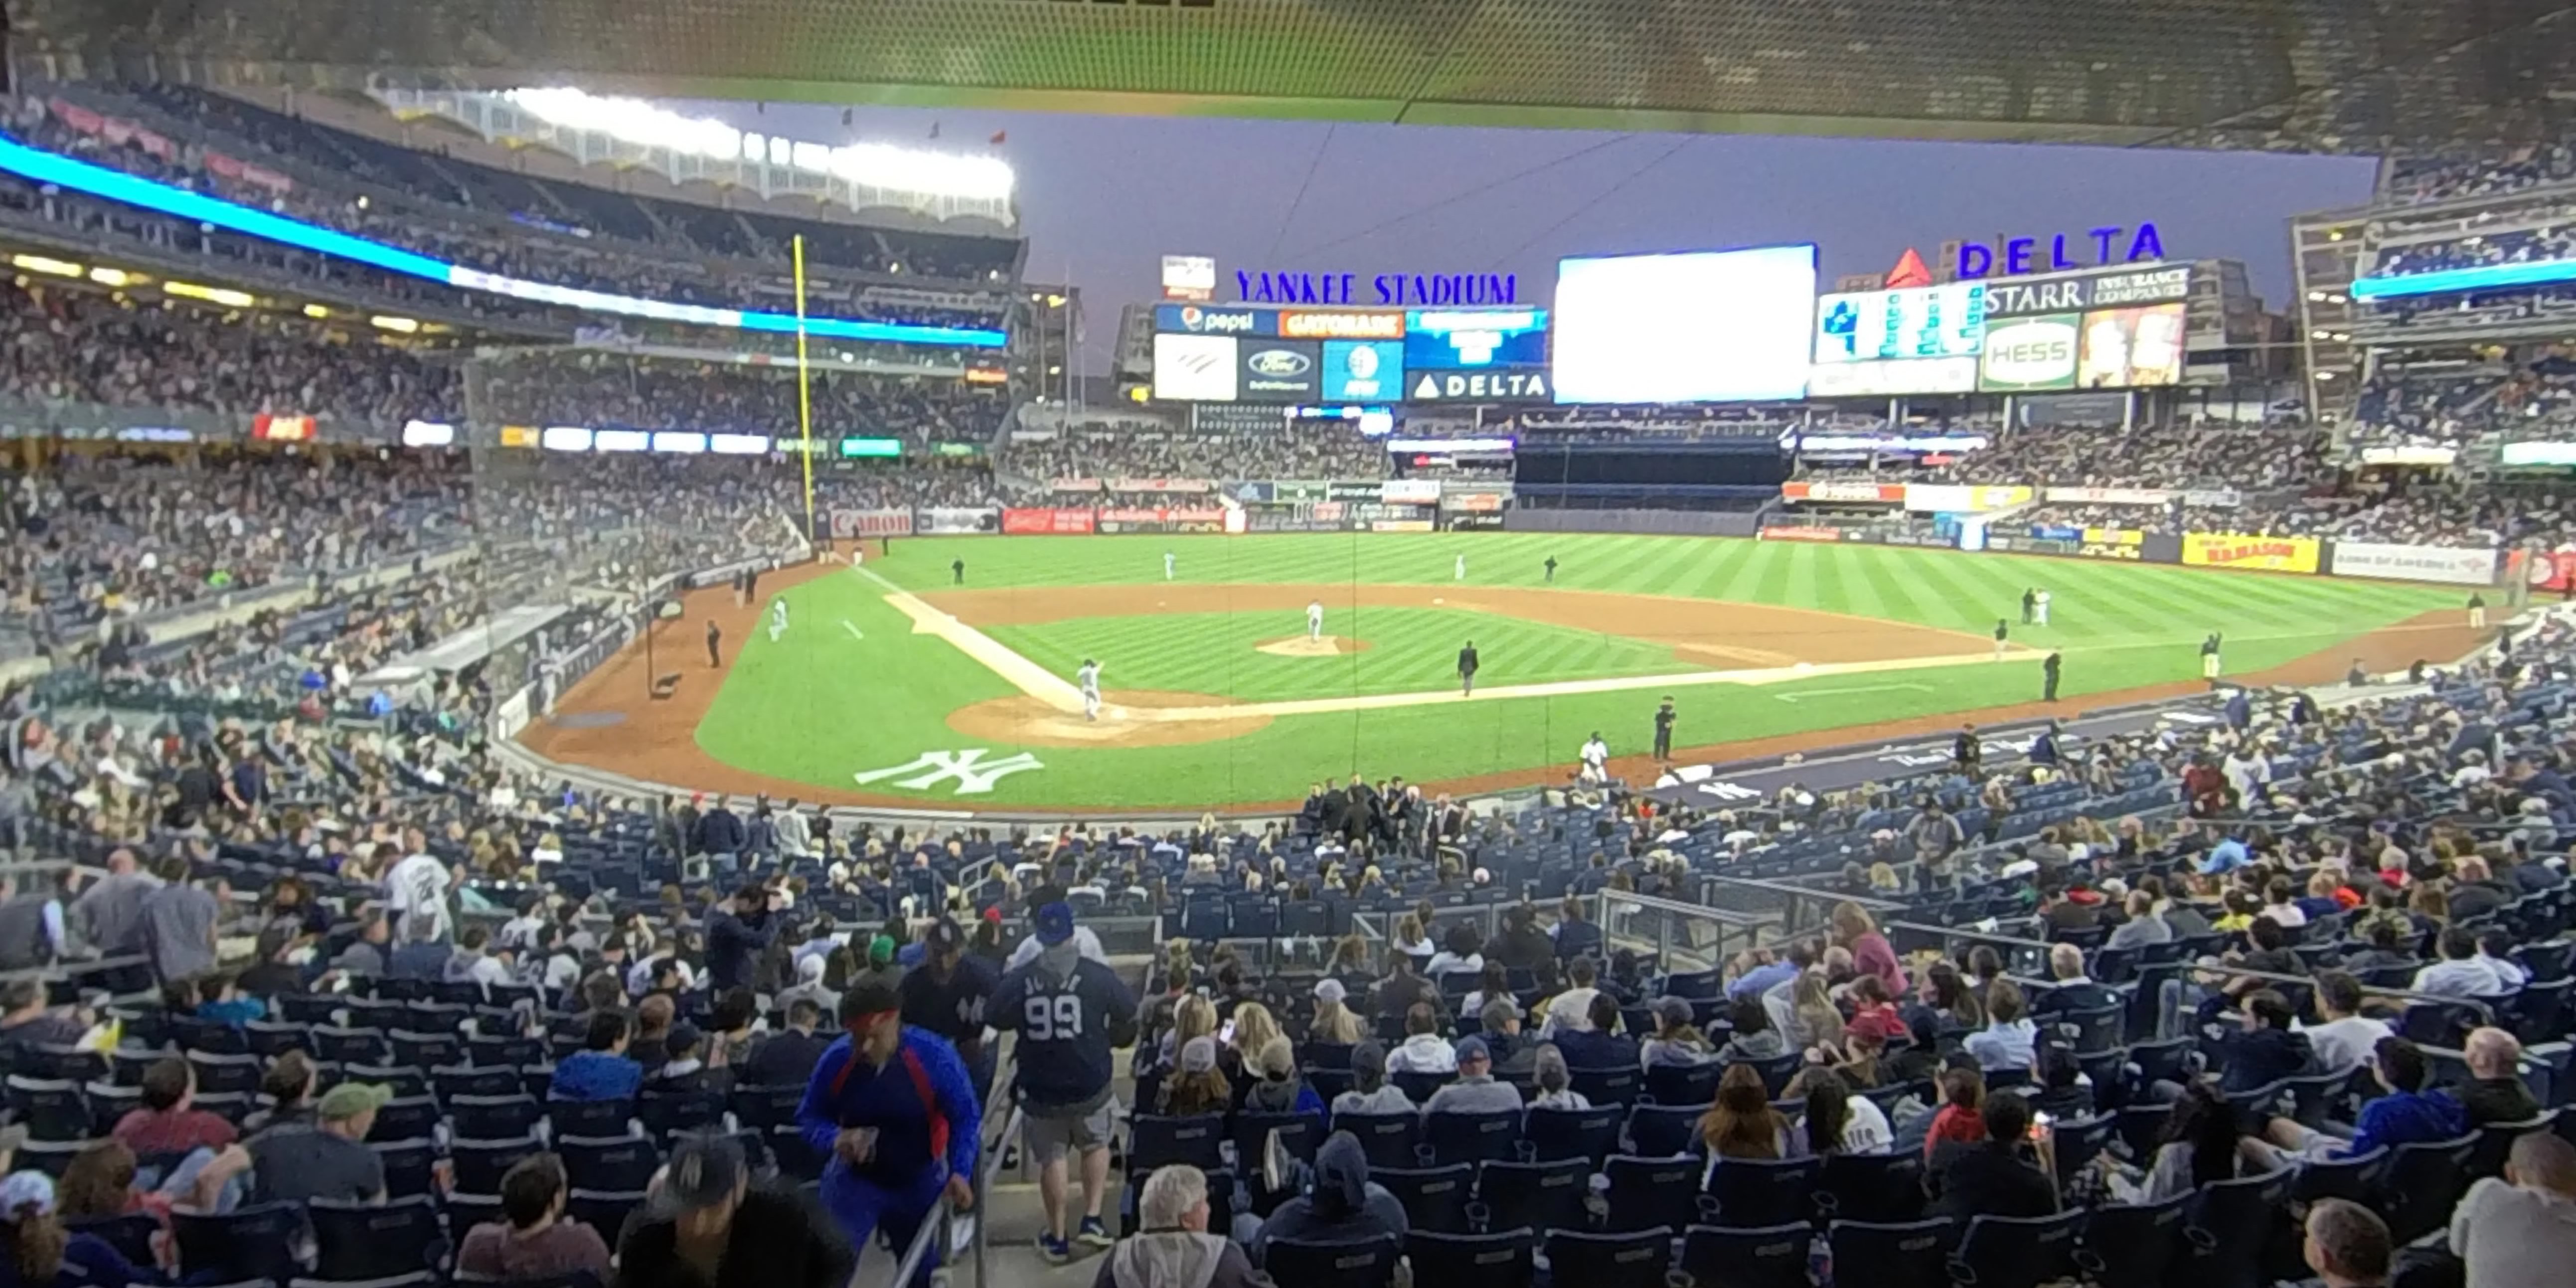 section 118 panoramic seat view  for baseball - yankee stadium